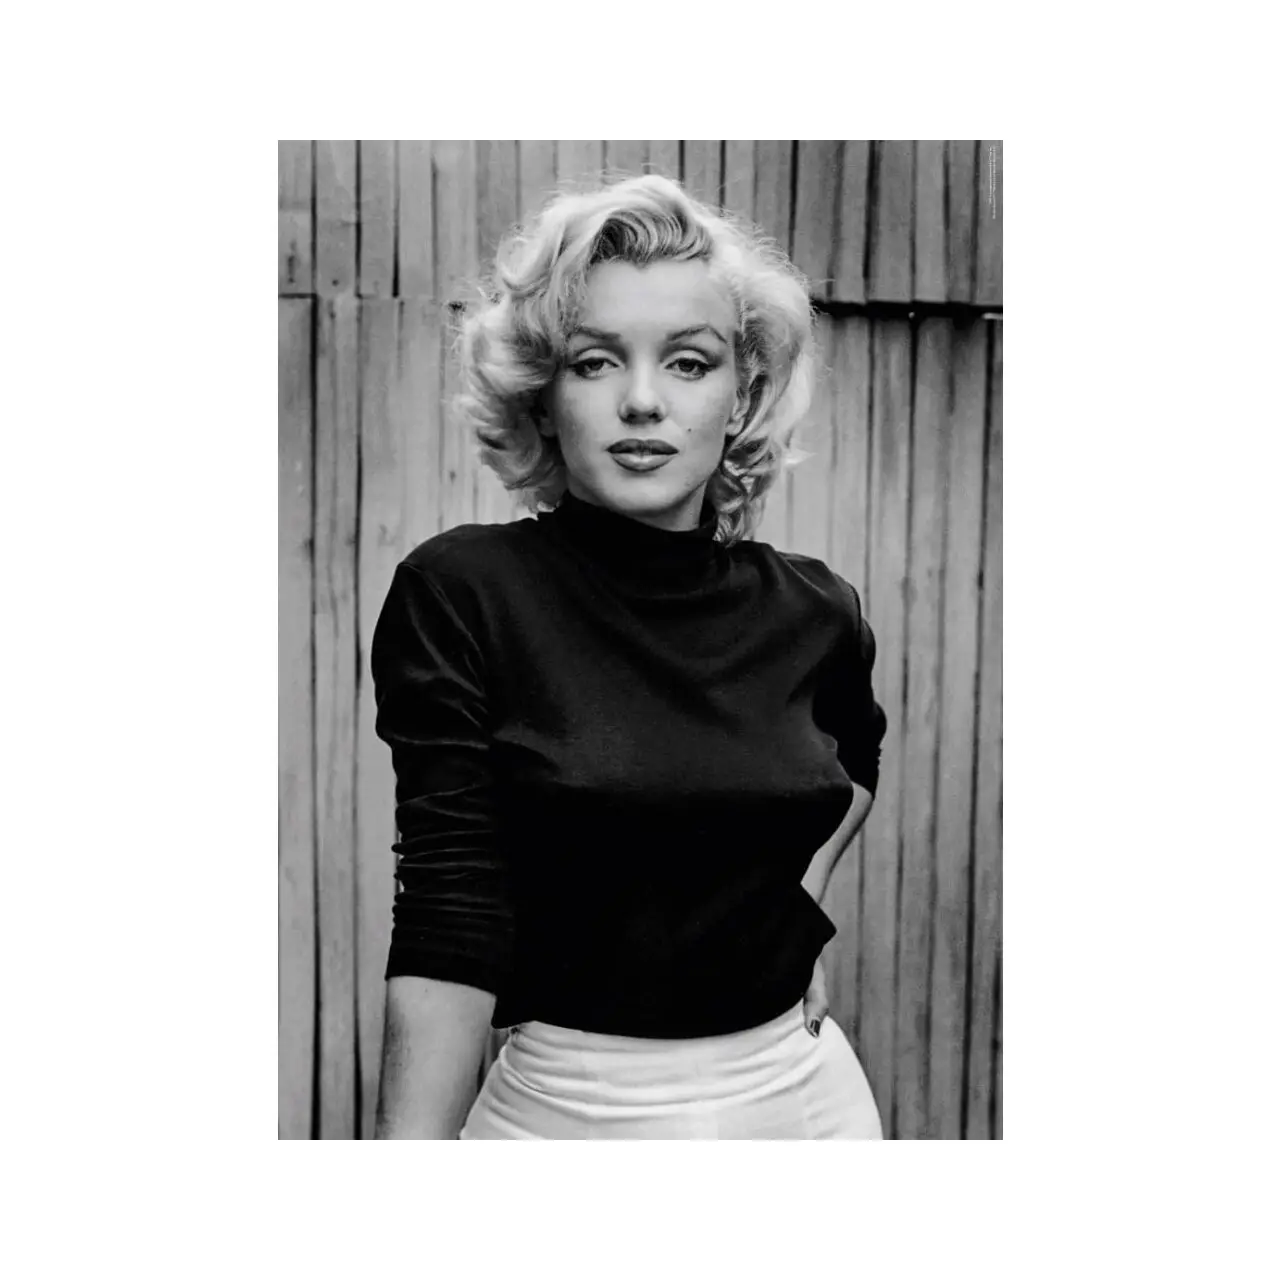 Puzzle Marilyn Monroe 1000 Teile